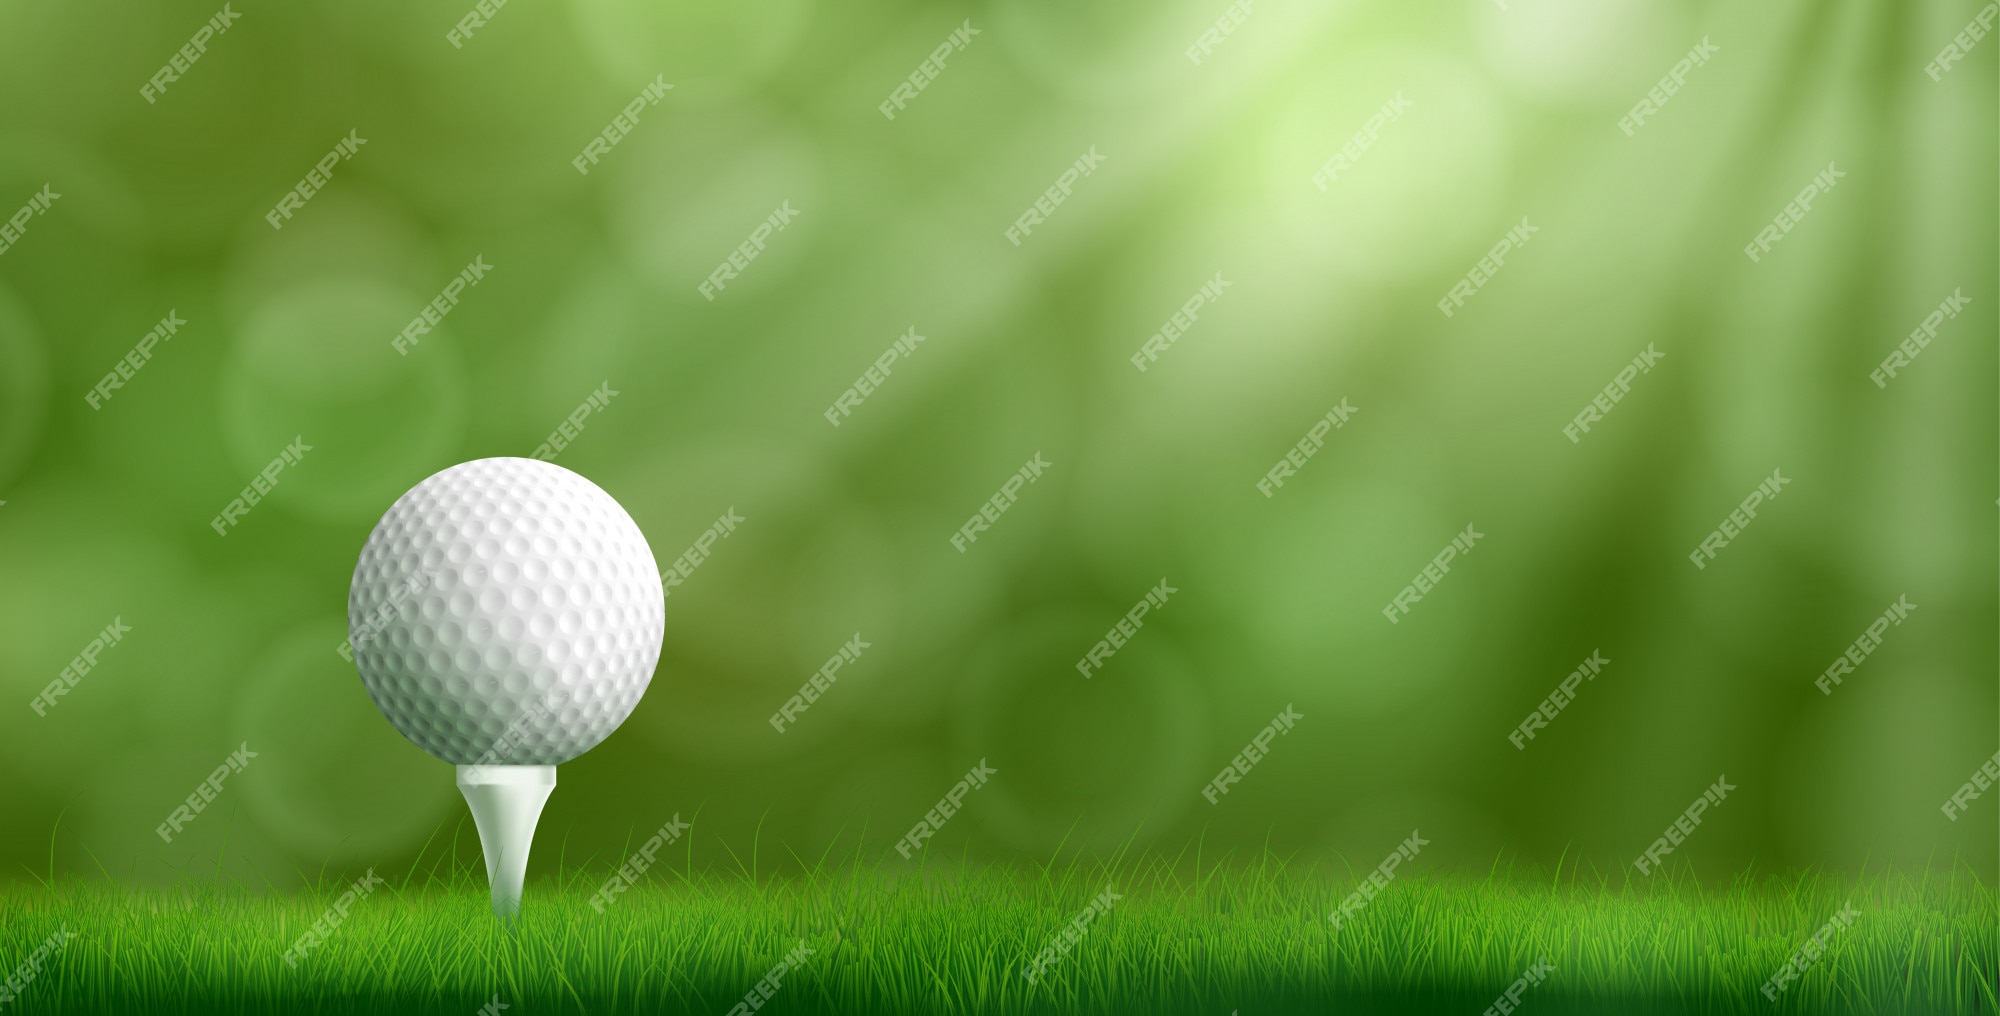 Golf Green Images - Free Download on Freepik